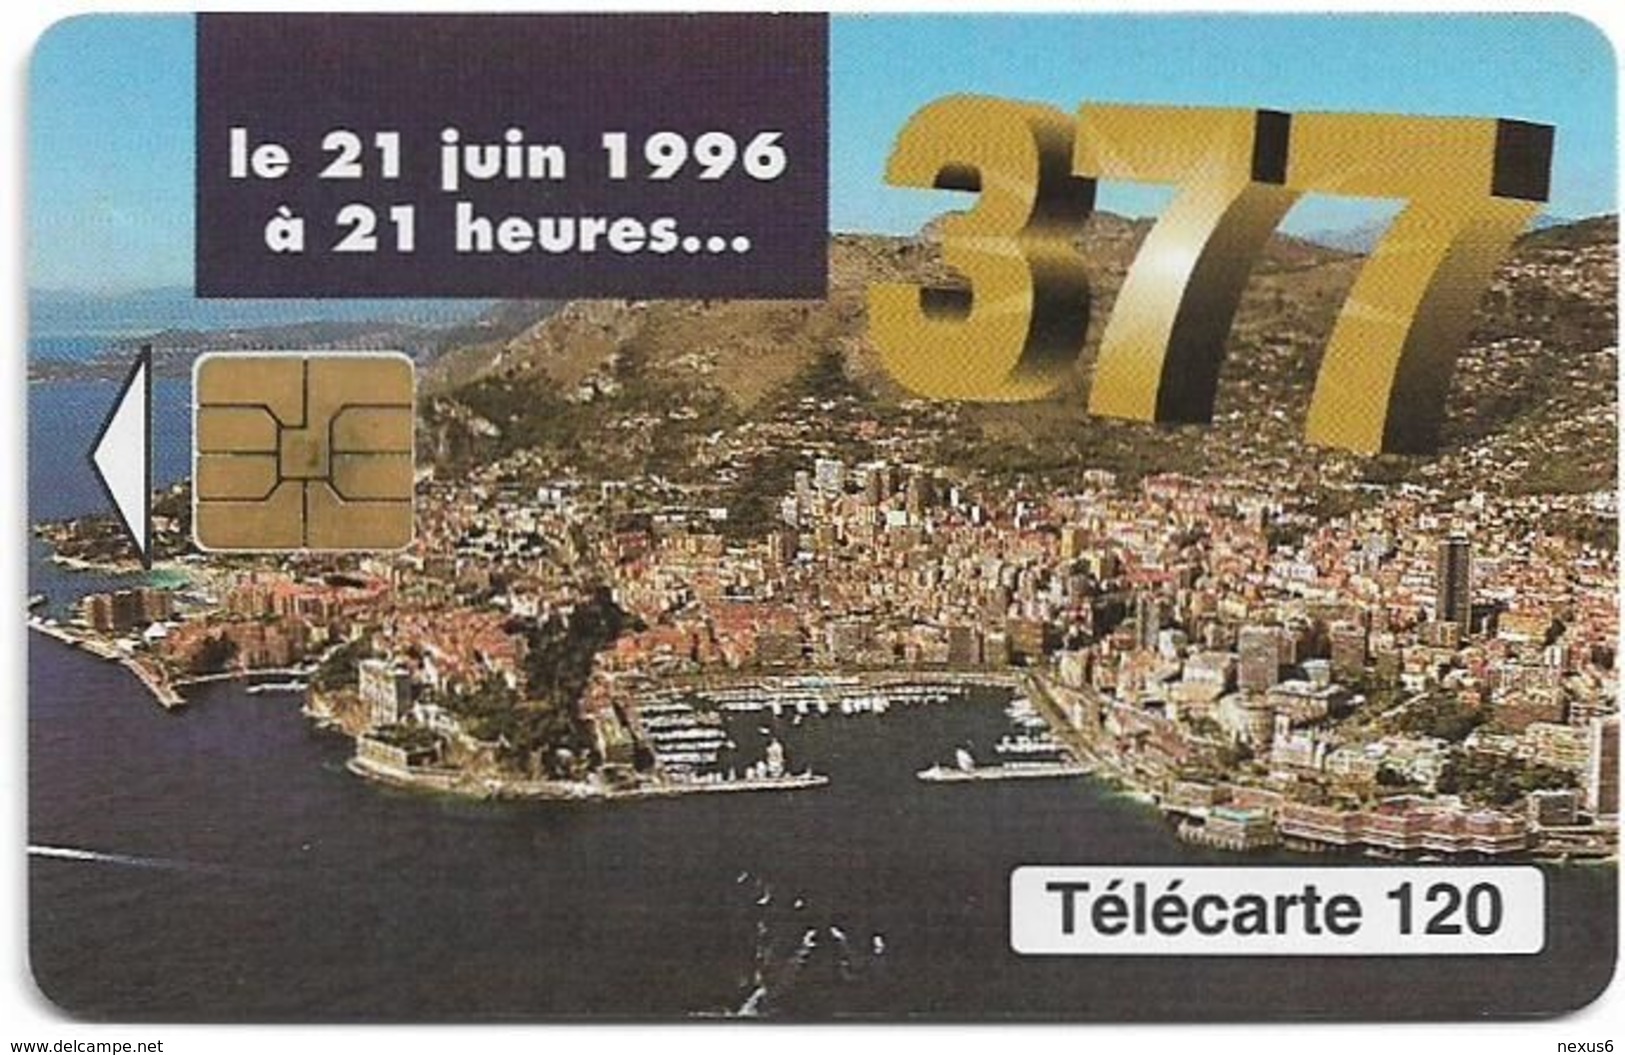 Monaco - MF42B - 377, Changement Numérotation - Cn. A Xxxxx638 - 06.1996, Solaic Afnor, 120Units, 100.000ex, Used - Monaco